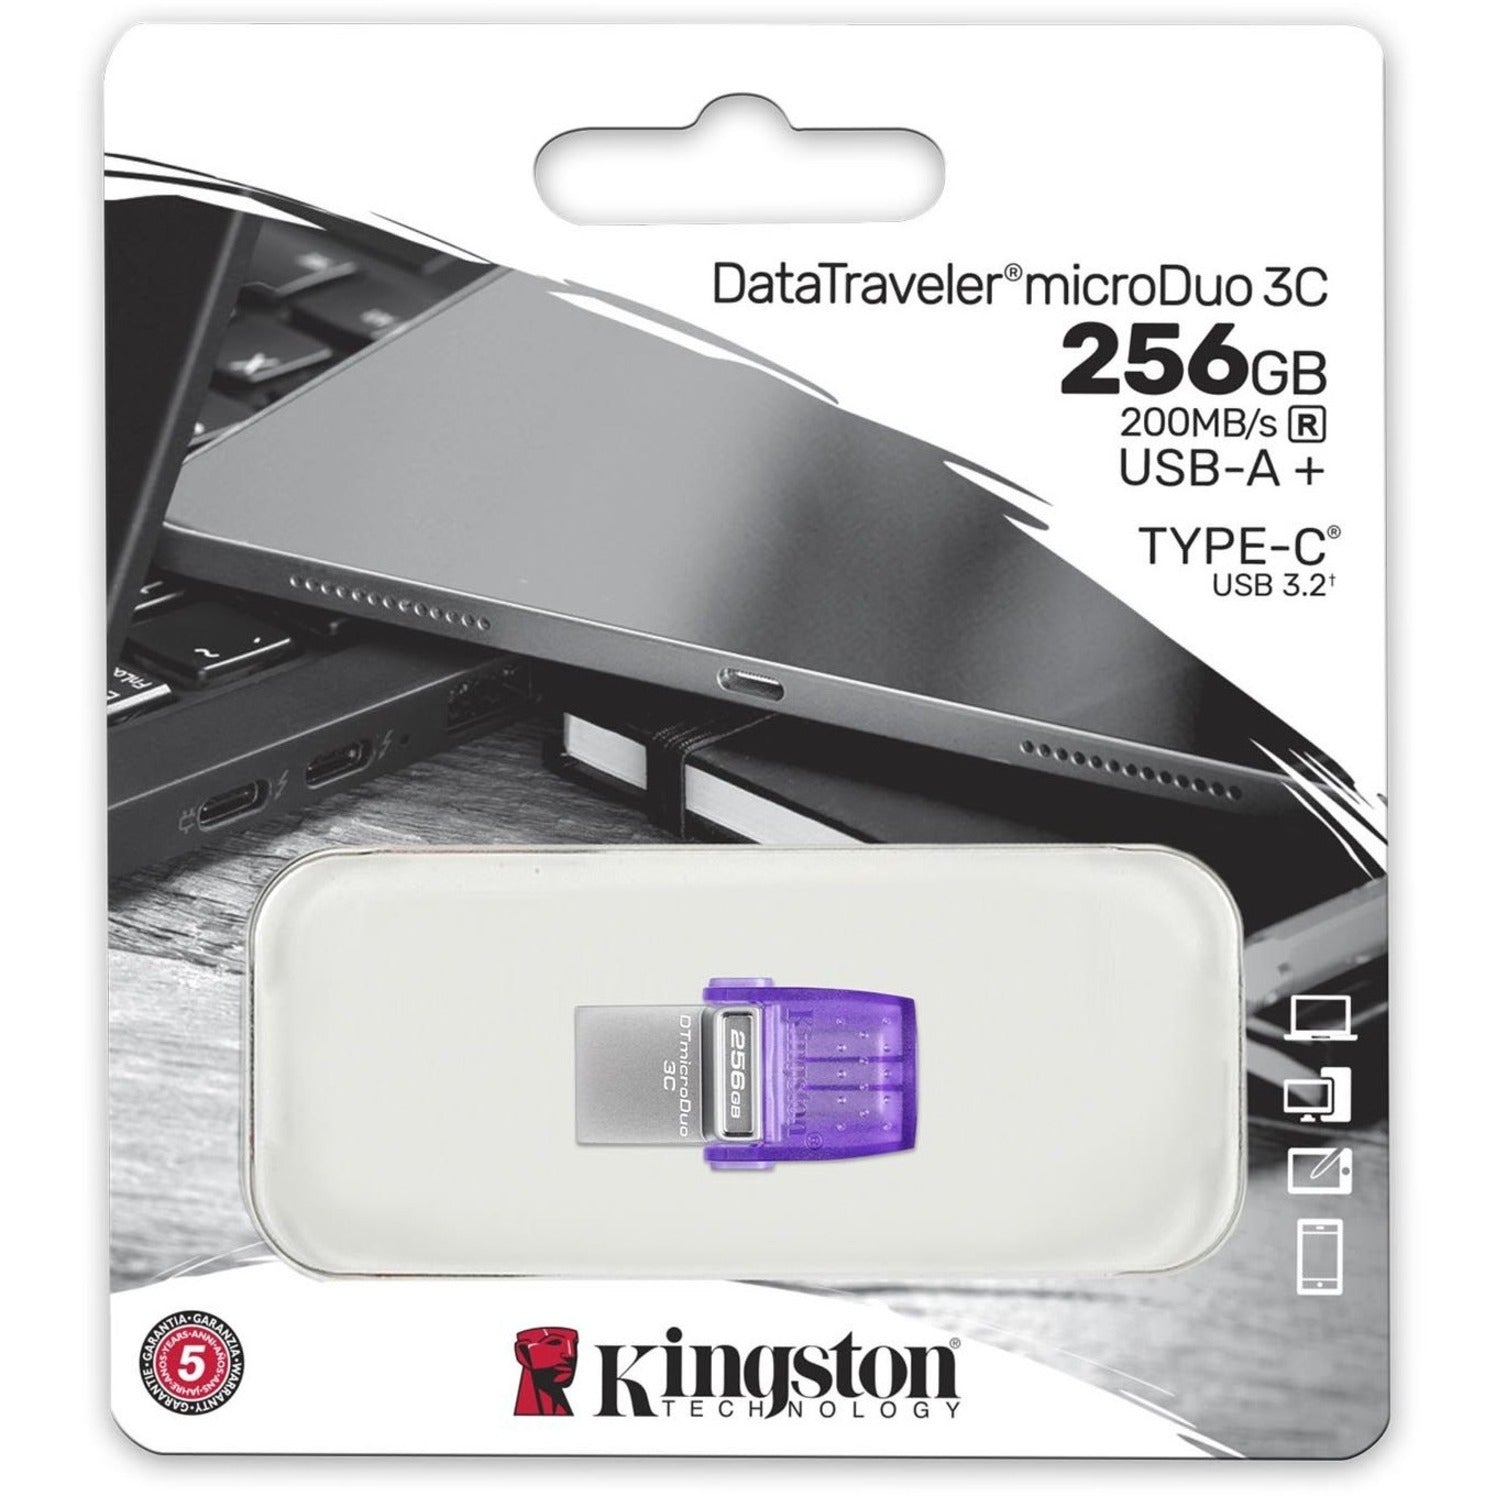 Kingston DTDUO3CG3/256GB DataTraveler microDuo 3C USB Flash Drive, 256GB Storage, Purple